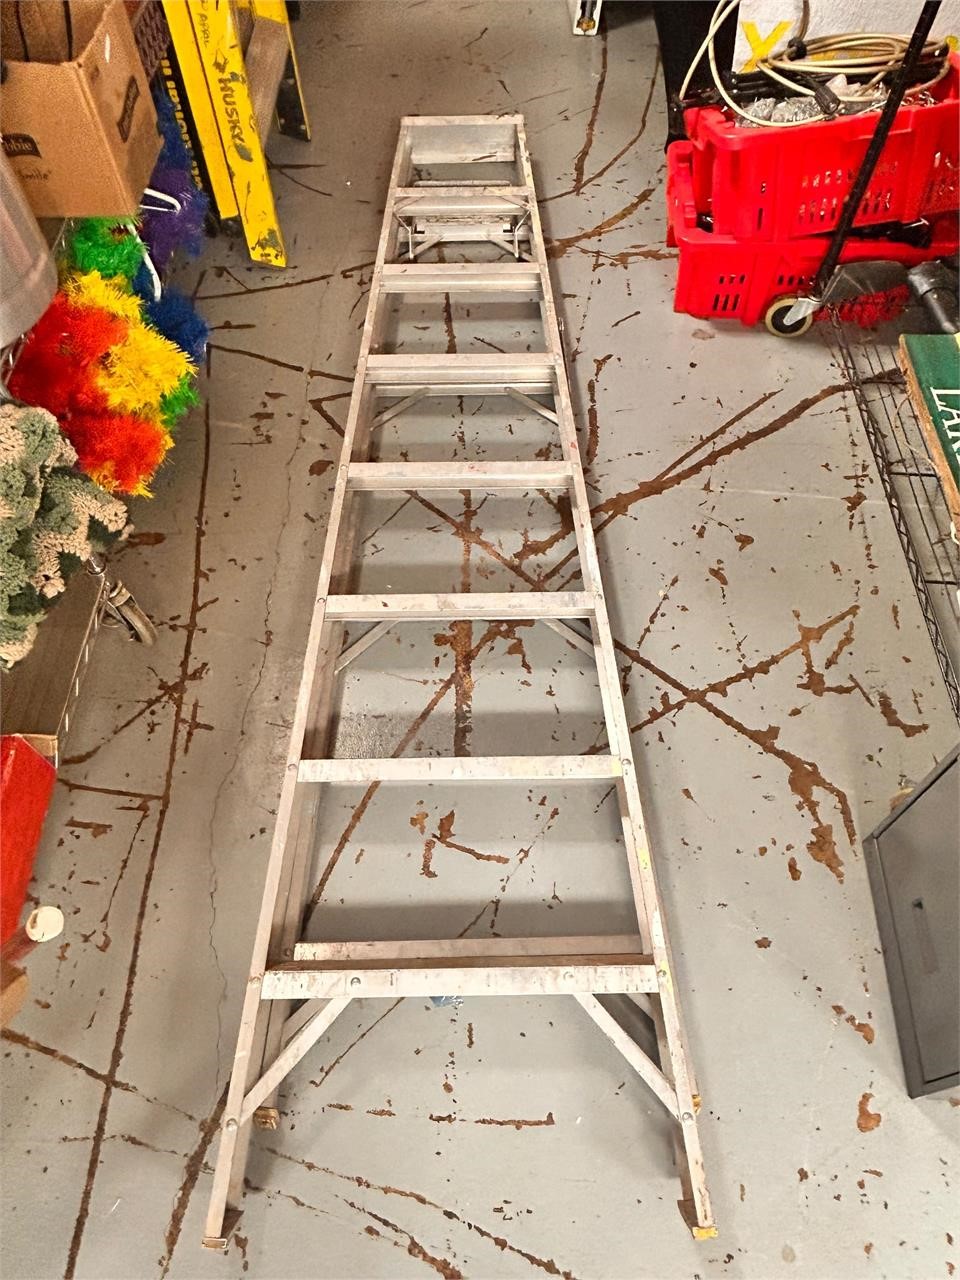 Silver Aluminum Ladder